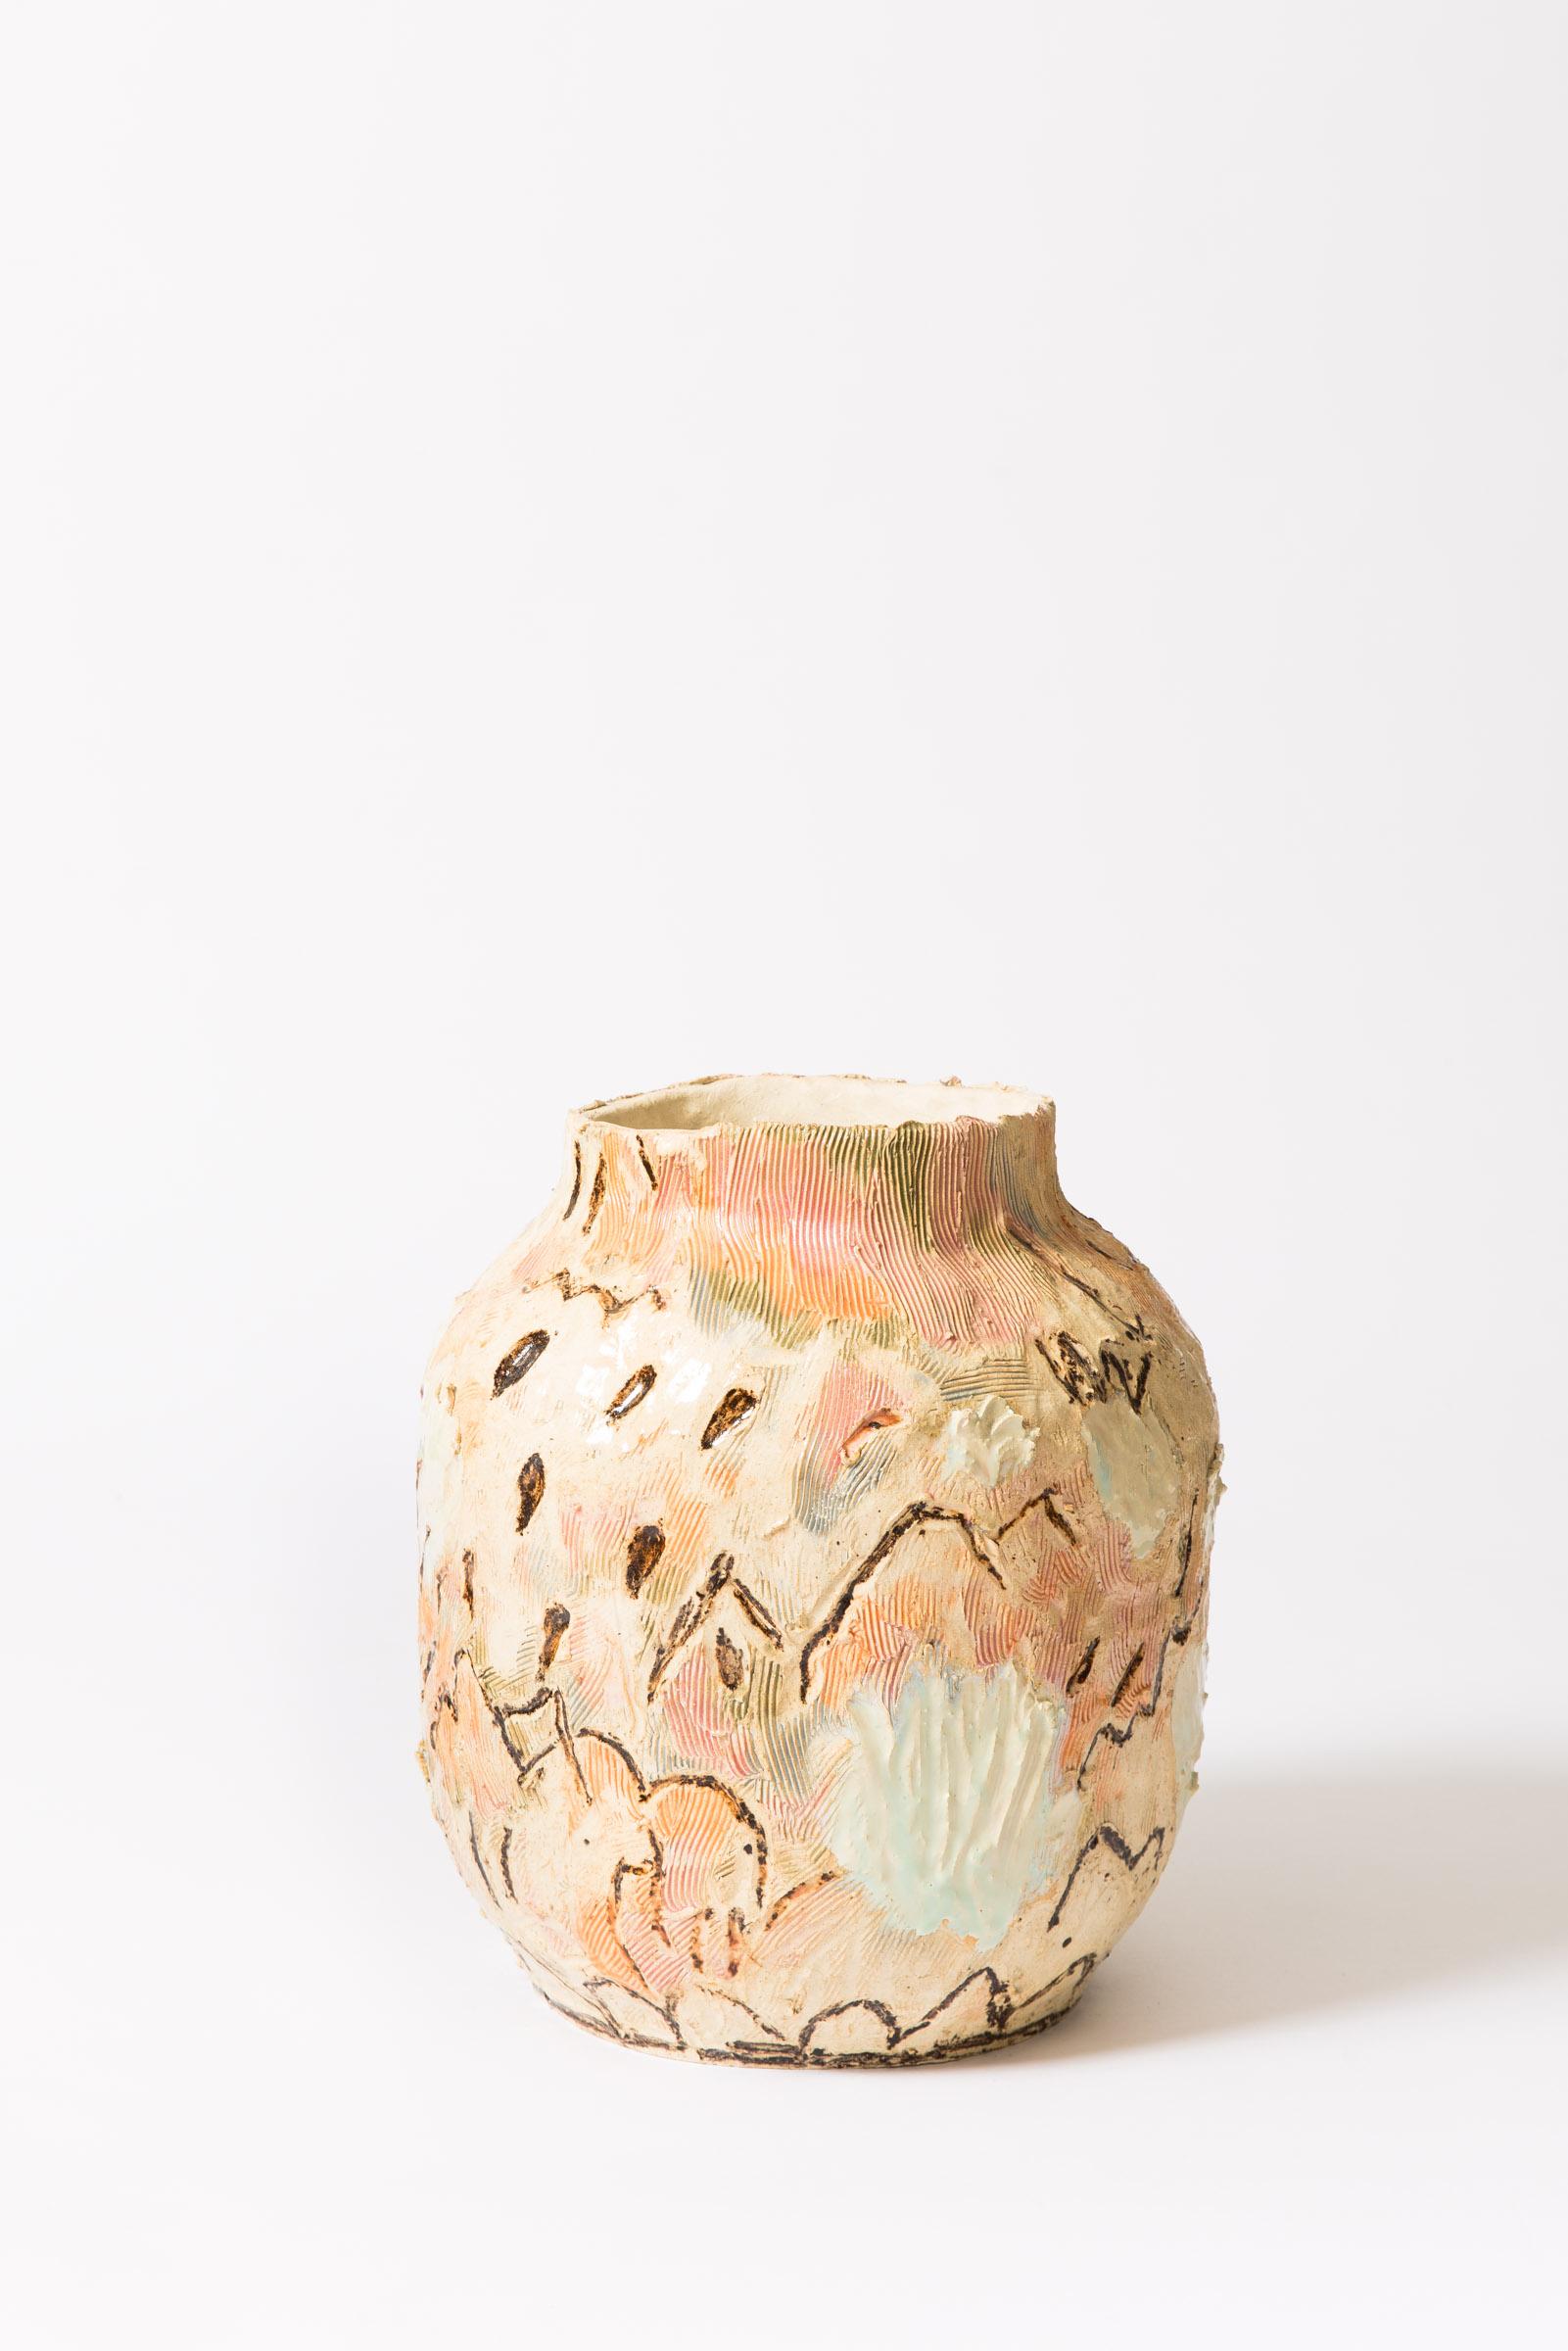 Glazed Sculptural Ceramic Vessel by Jacque Faus For Sale